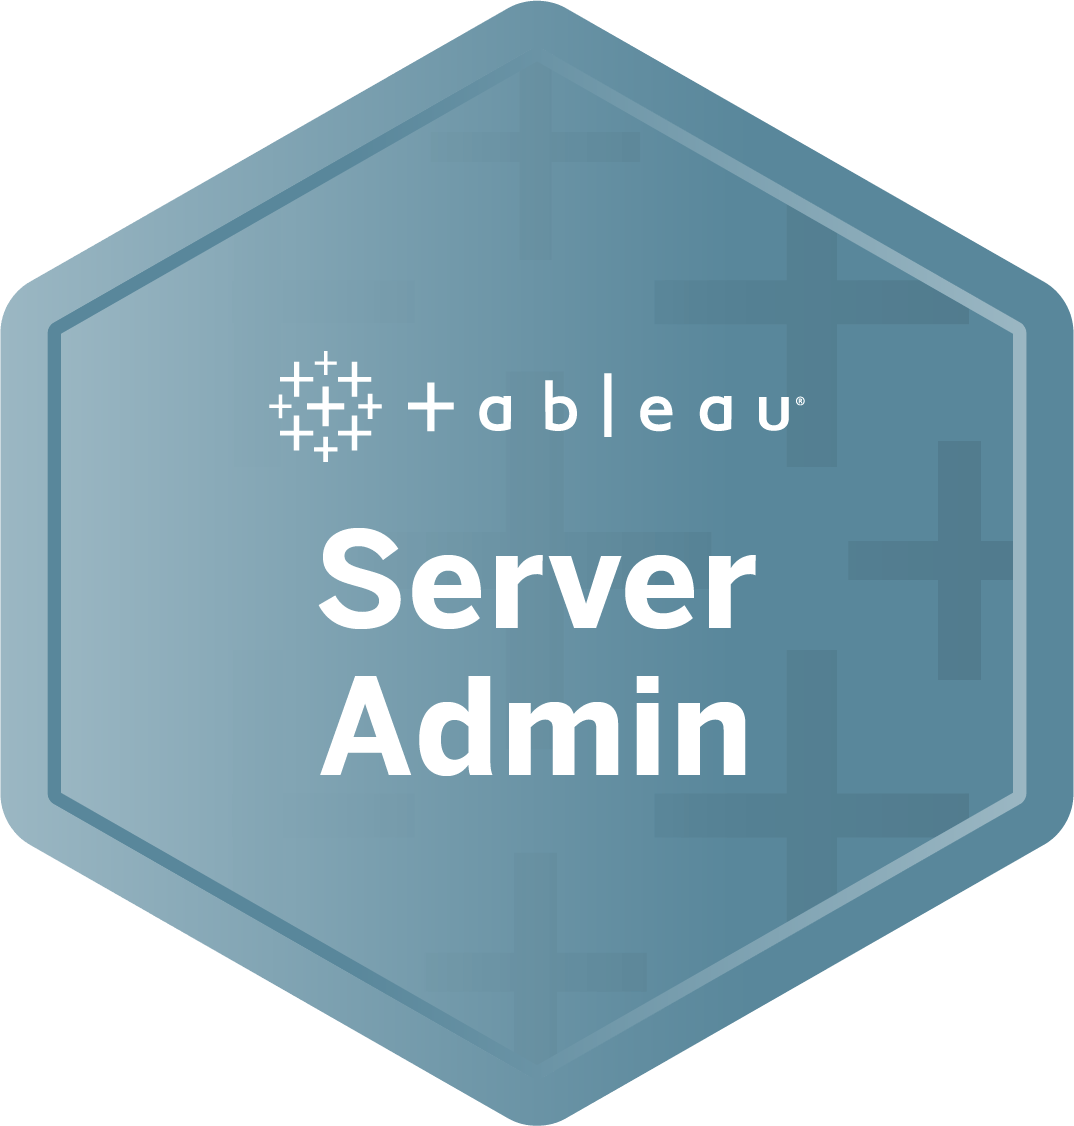  Tableau Certified Server Admin